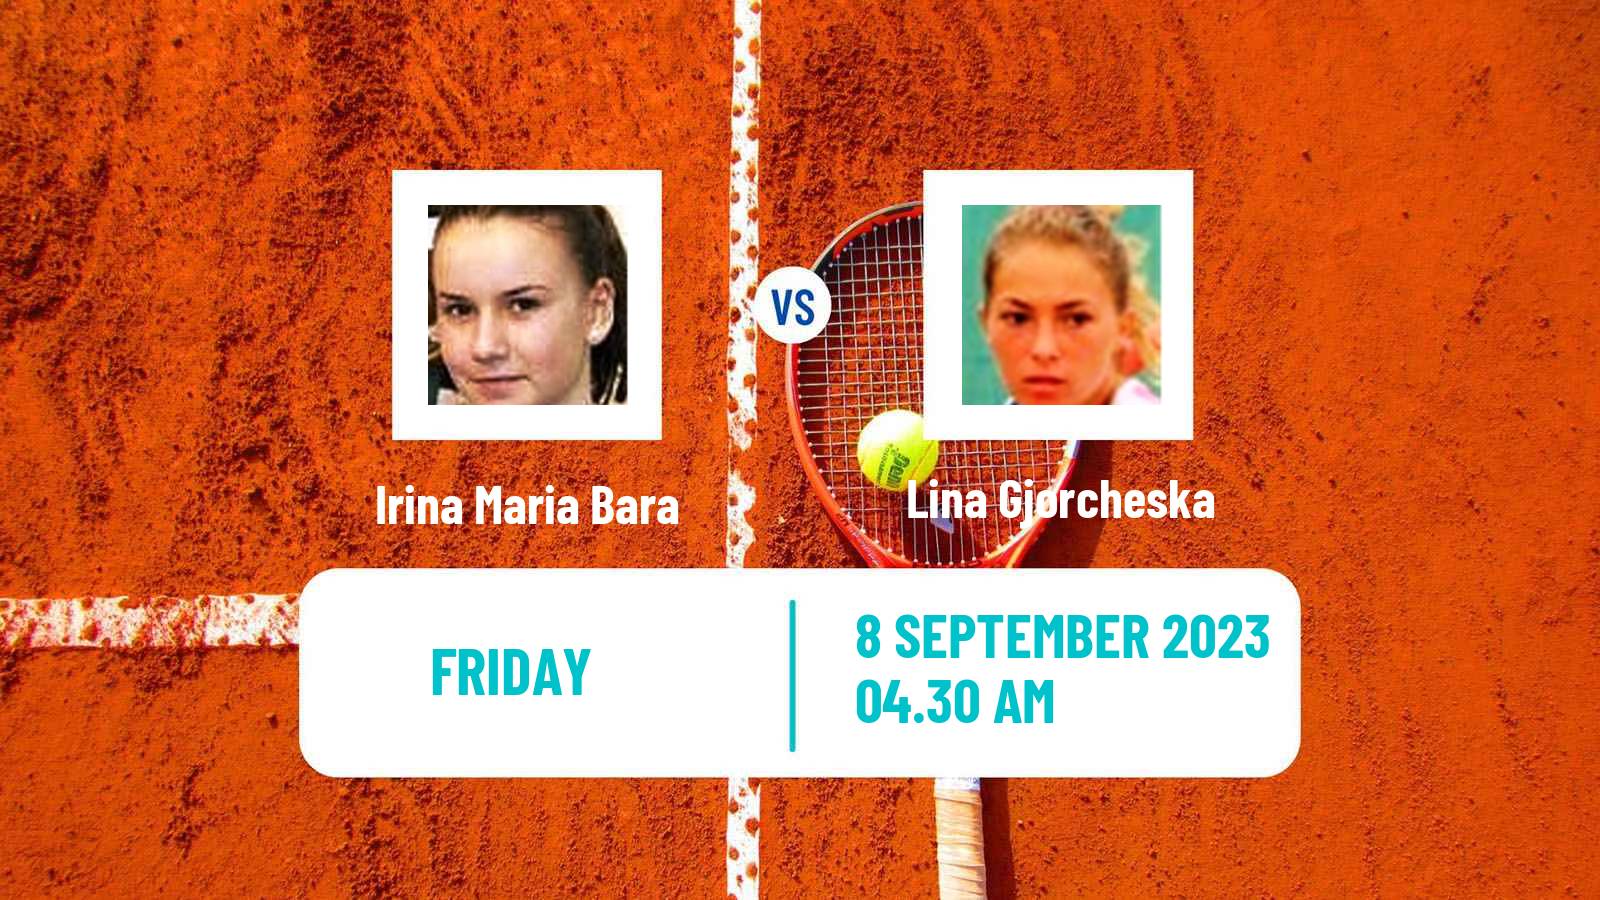 Tennis ITF W60 Vienna Women Irina Maria Bara - Lina Gjorcheska